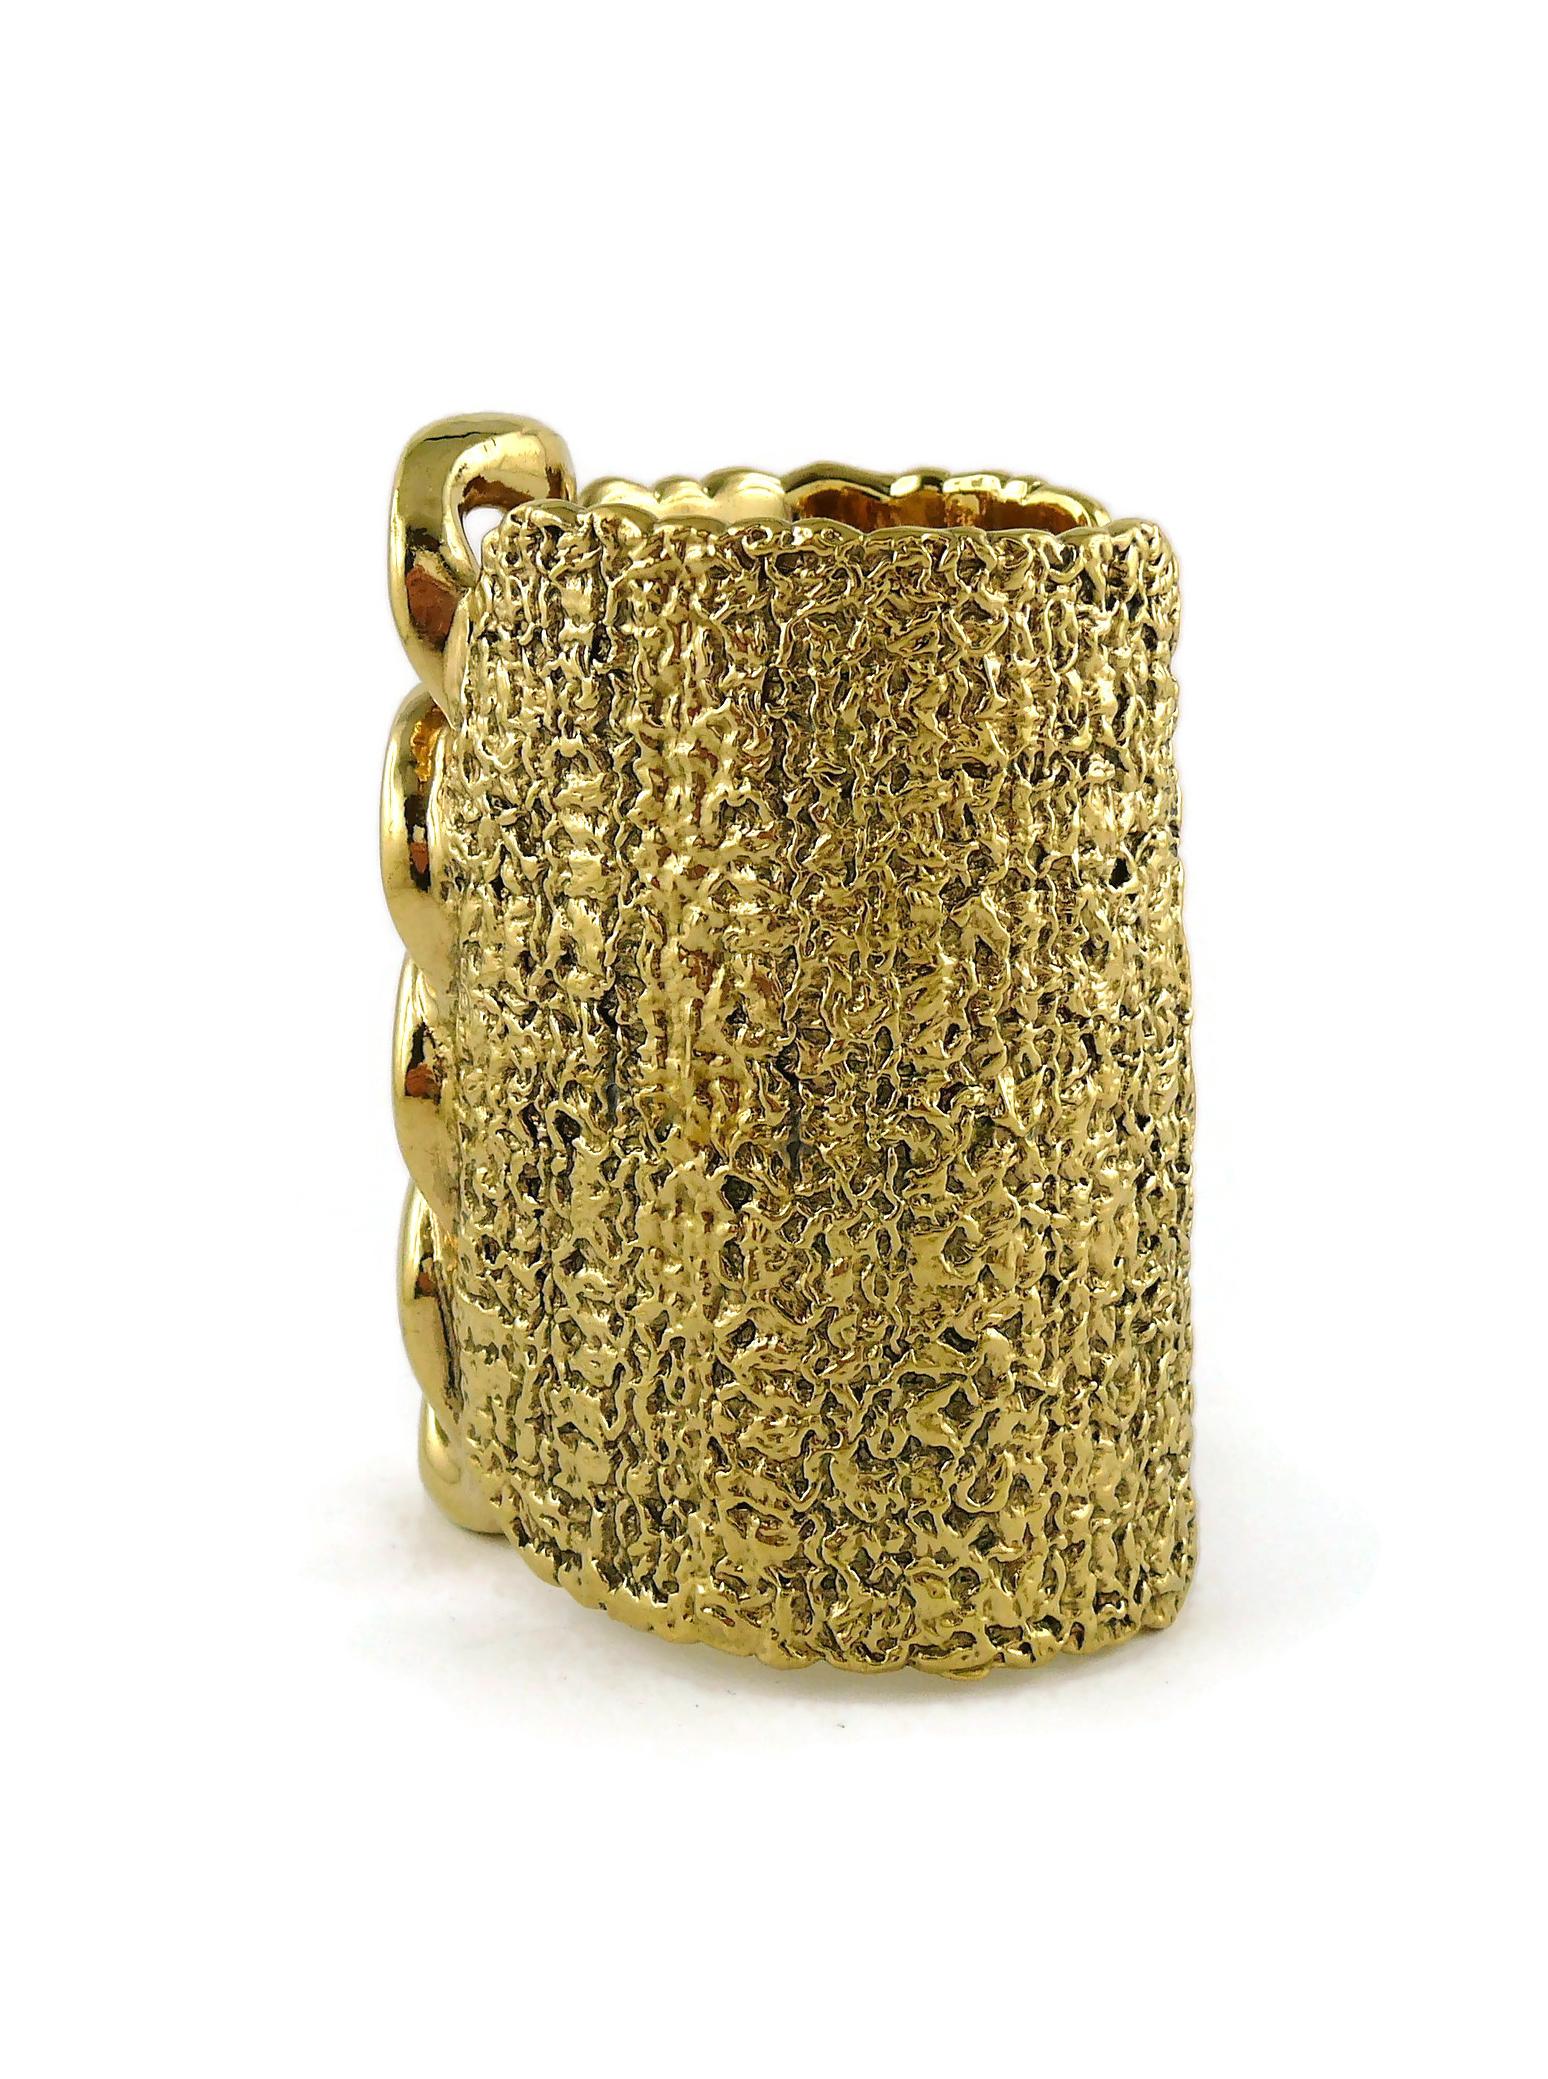 YVES SAINT LAURENT YSL Massive Gold Toned Chain Cuff Bracelet For Sale 5